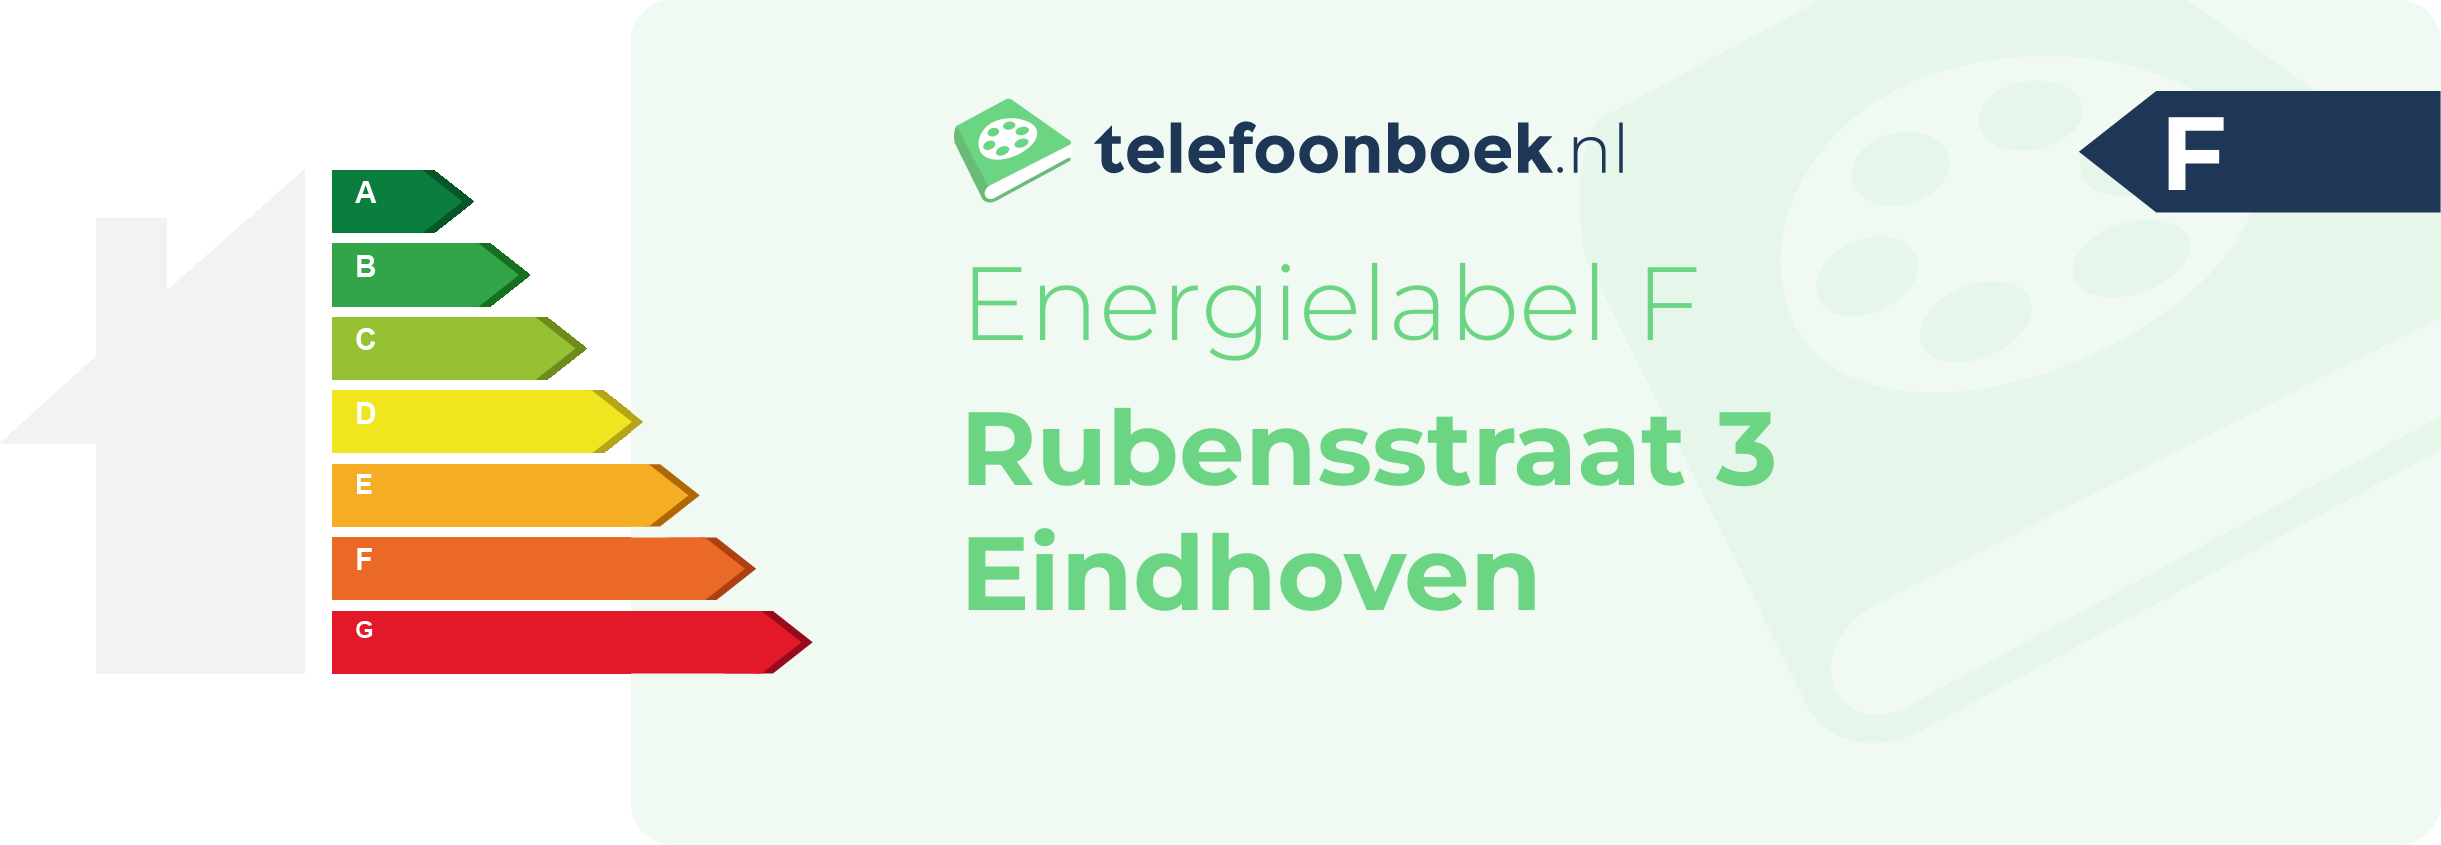 Energielabel Rubensstraat 3 Eindhoven